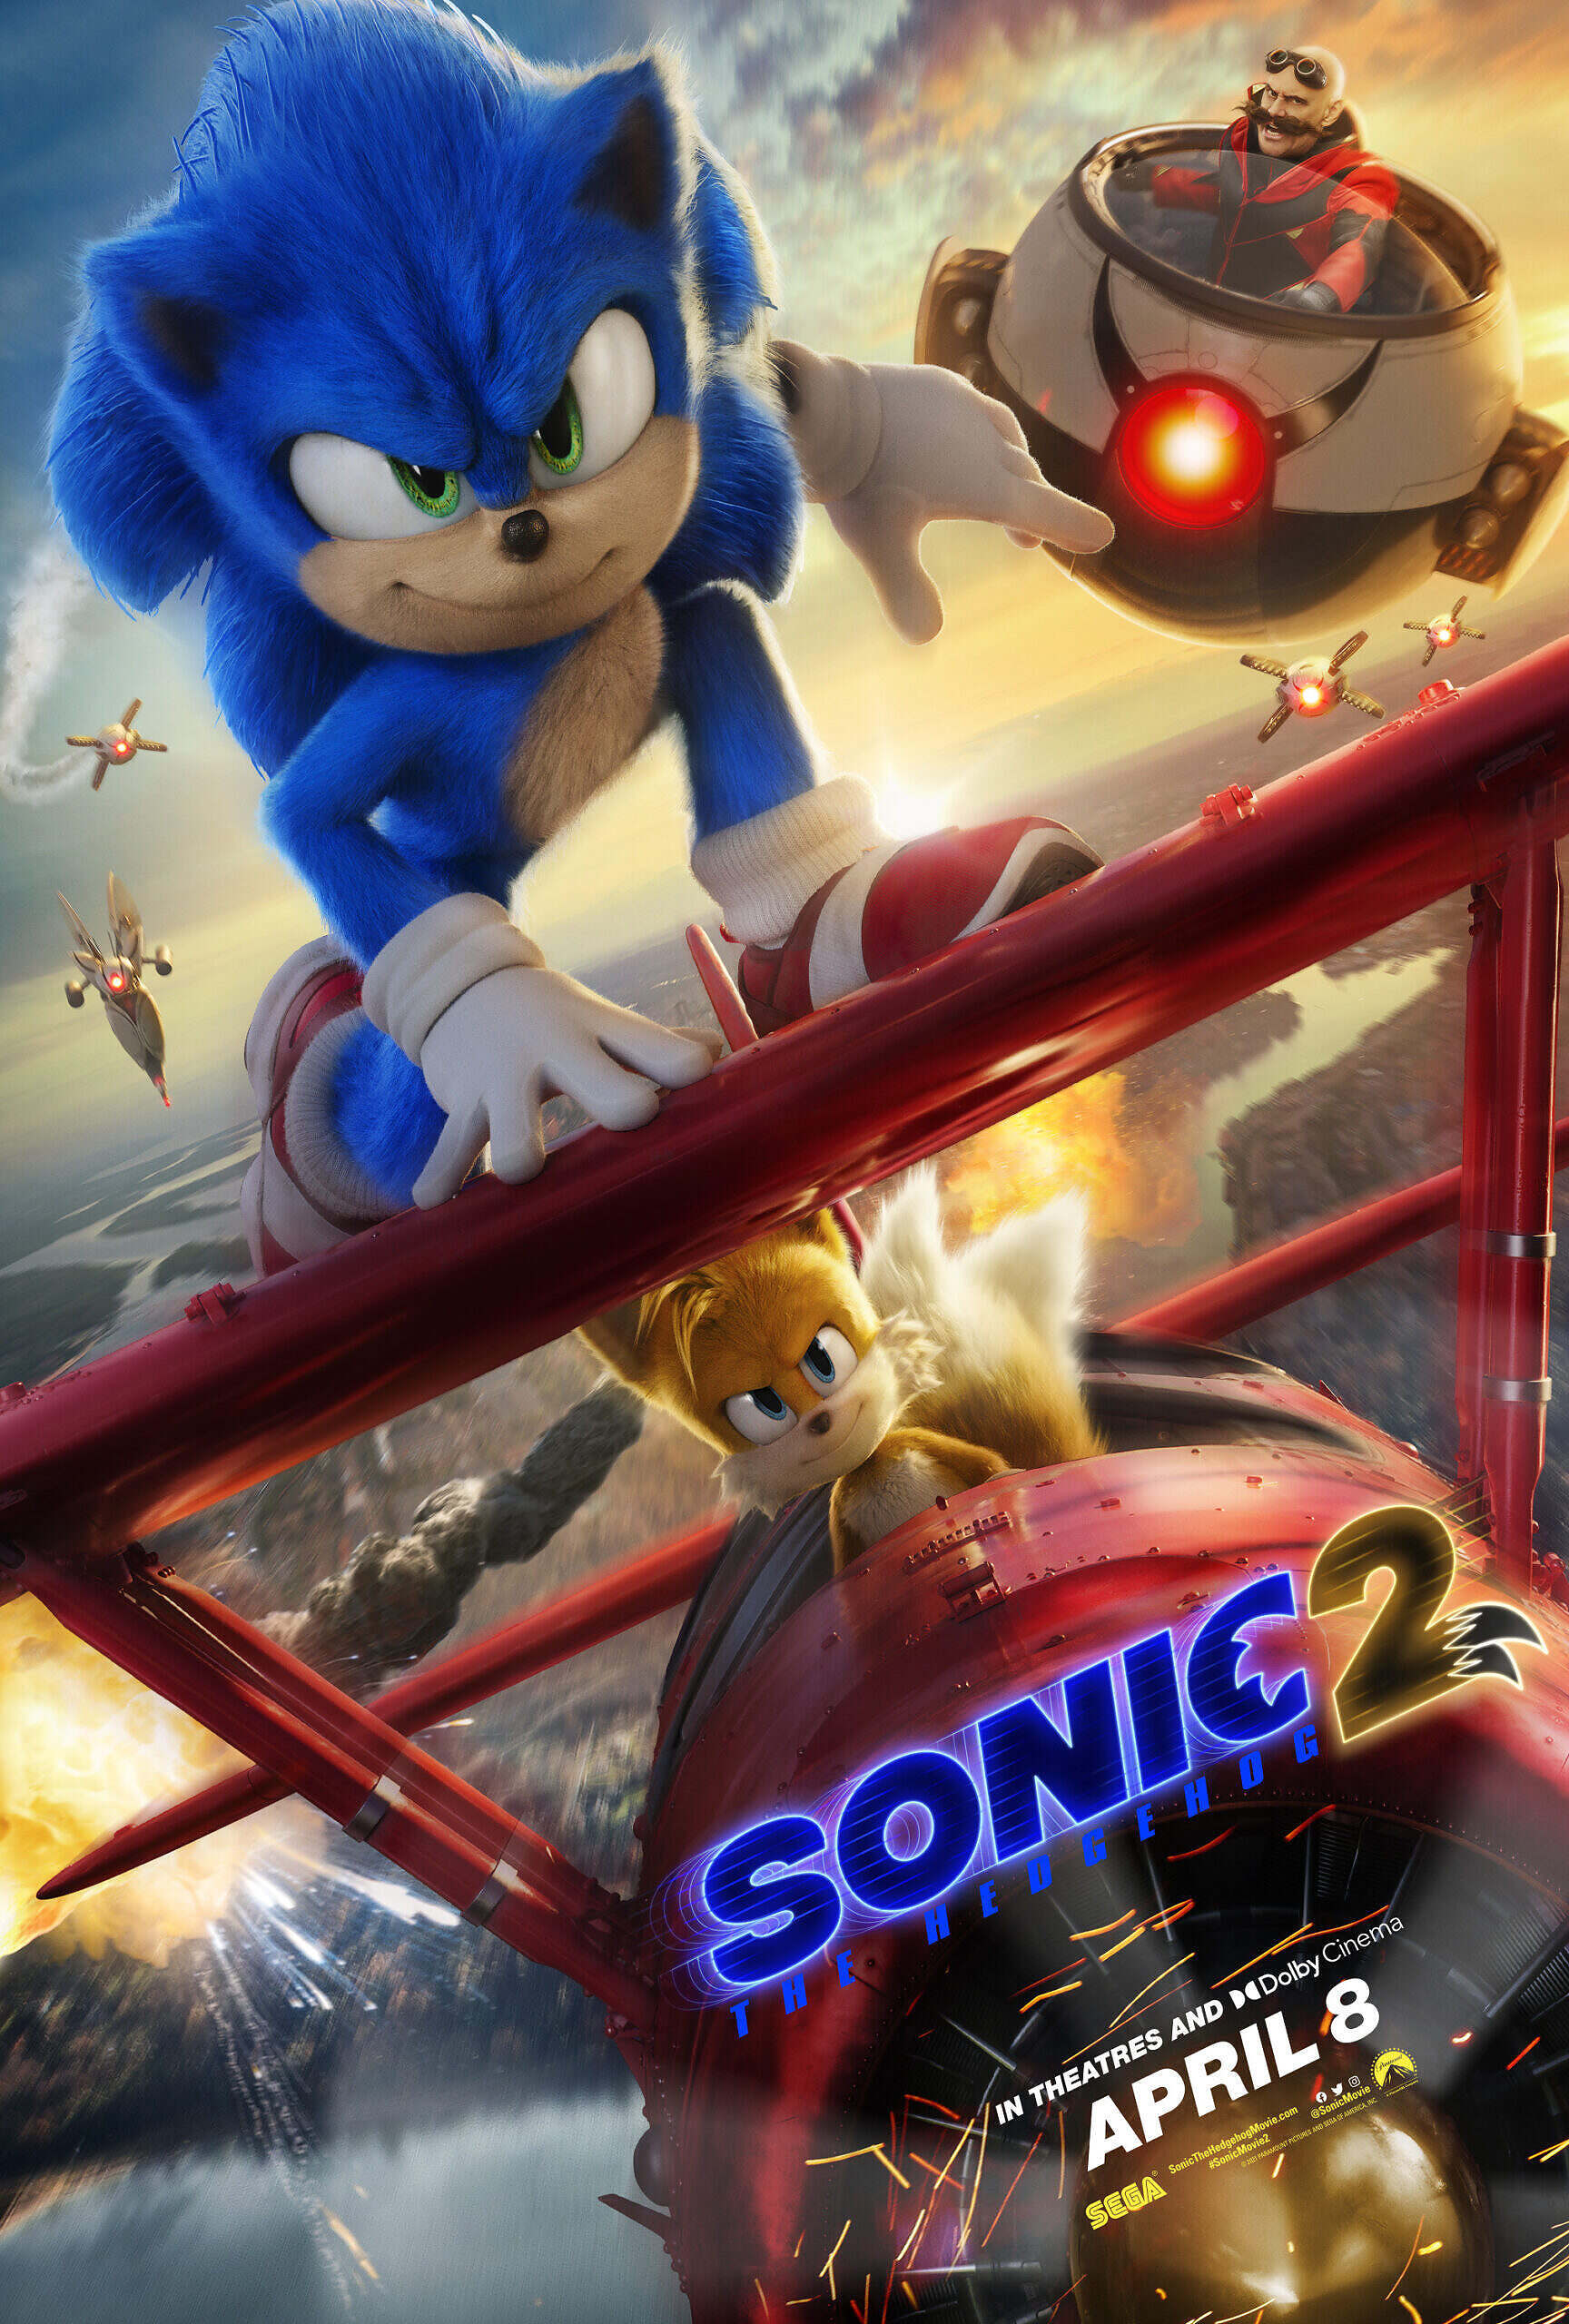 1st Trailer For 'Sonic The Hedgehog 2' Movie Starring Ben Schwartz, Idris Elba, & Jim Carrey